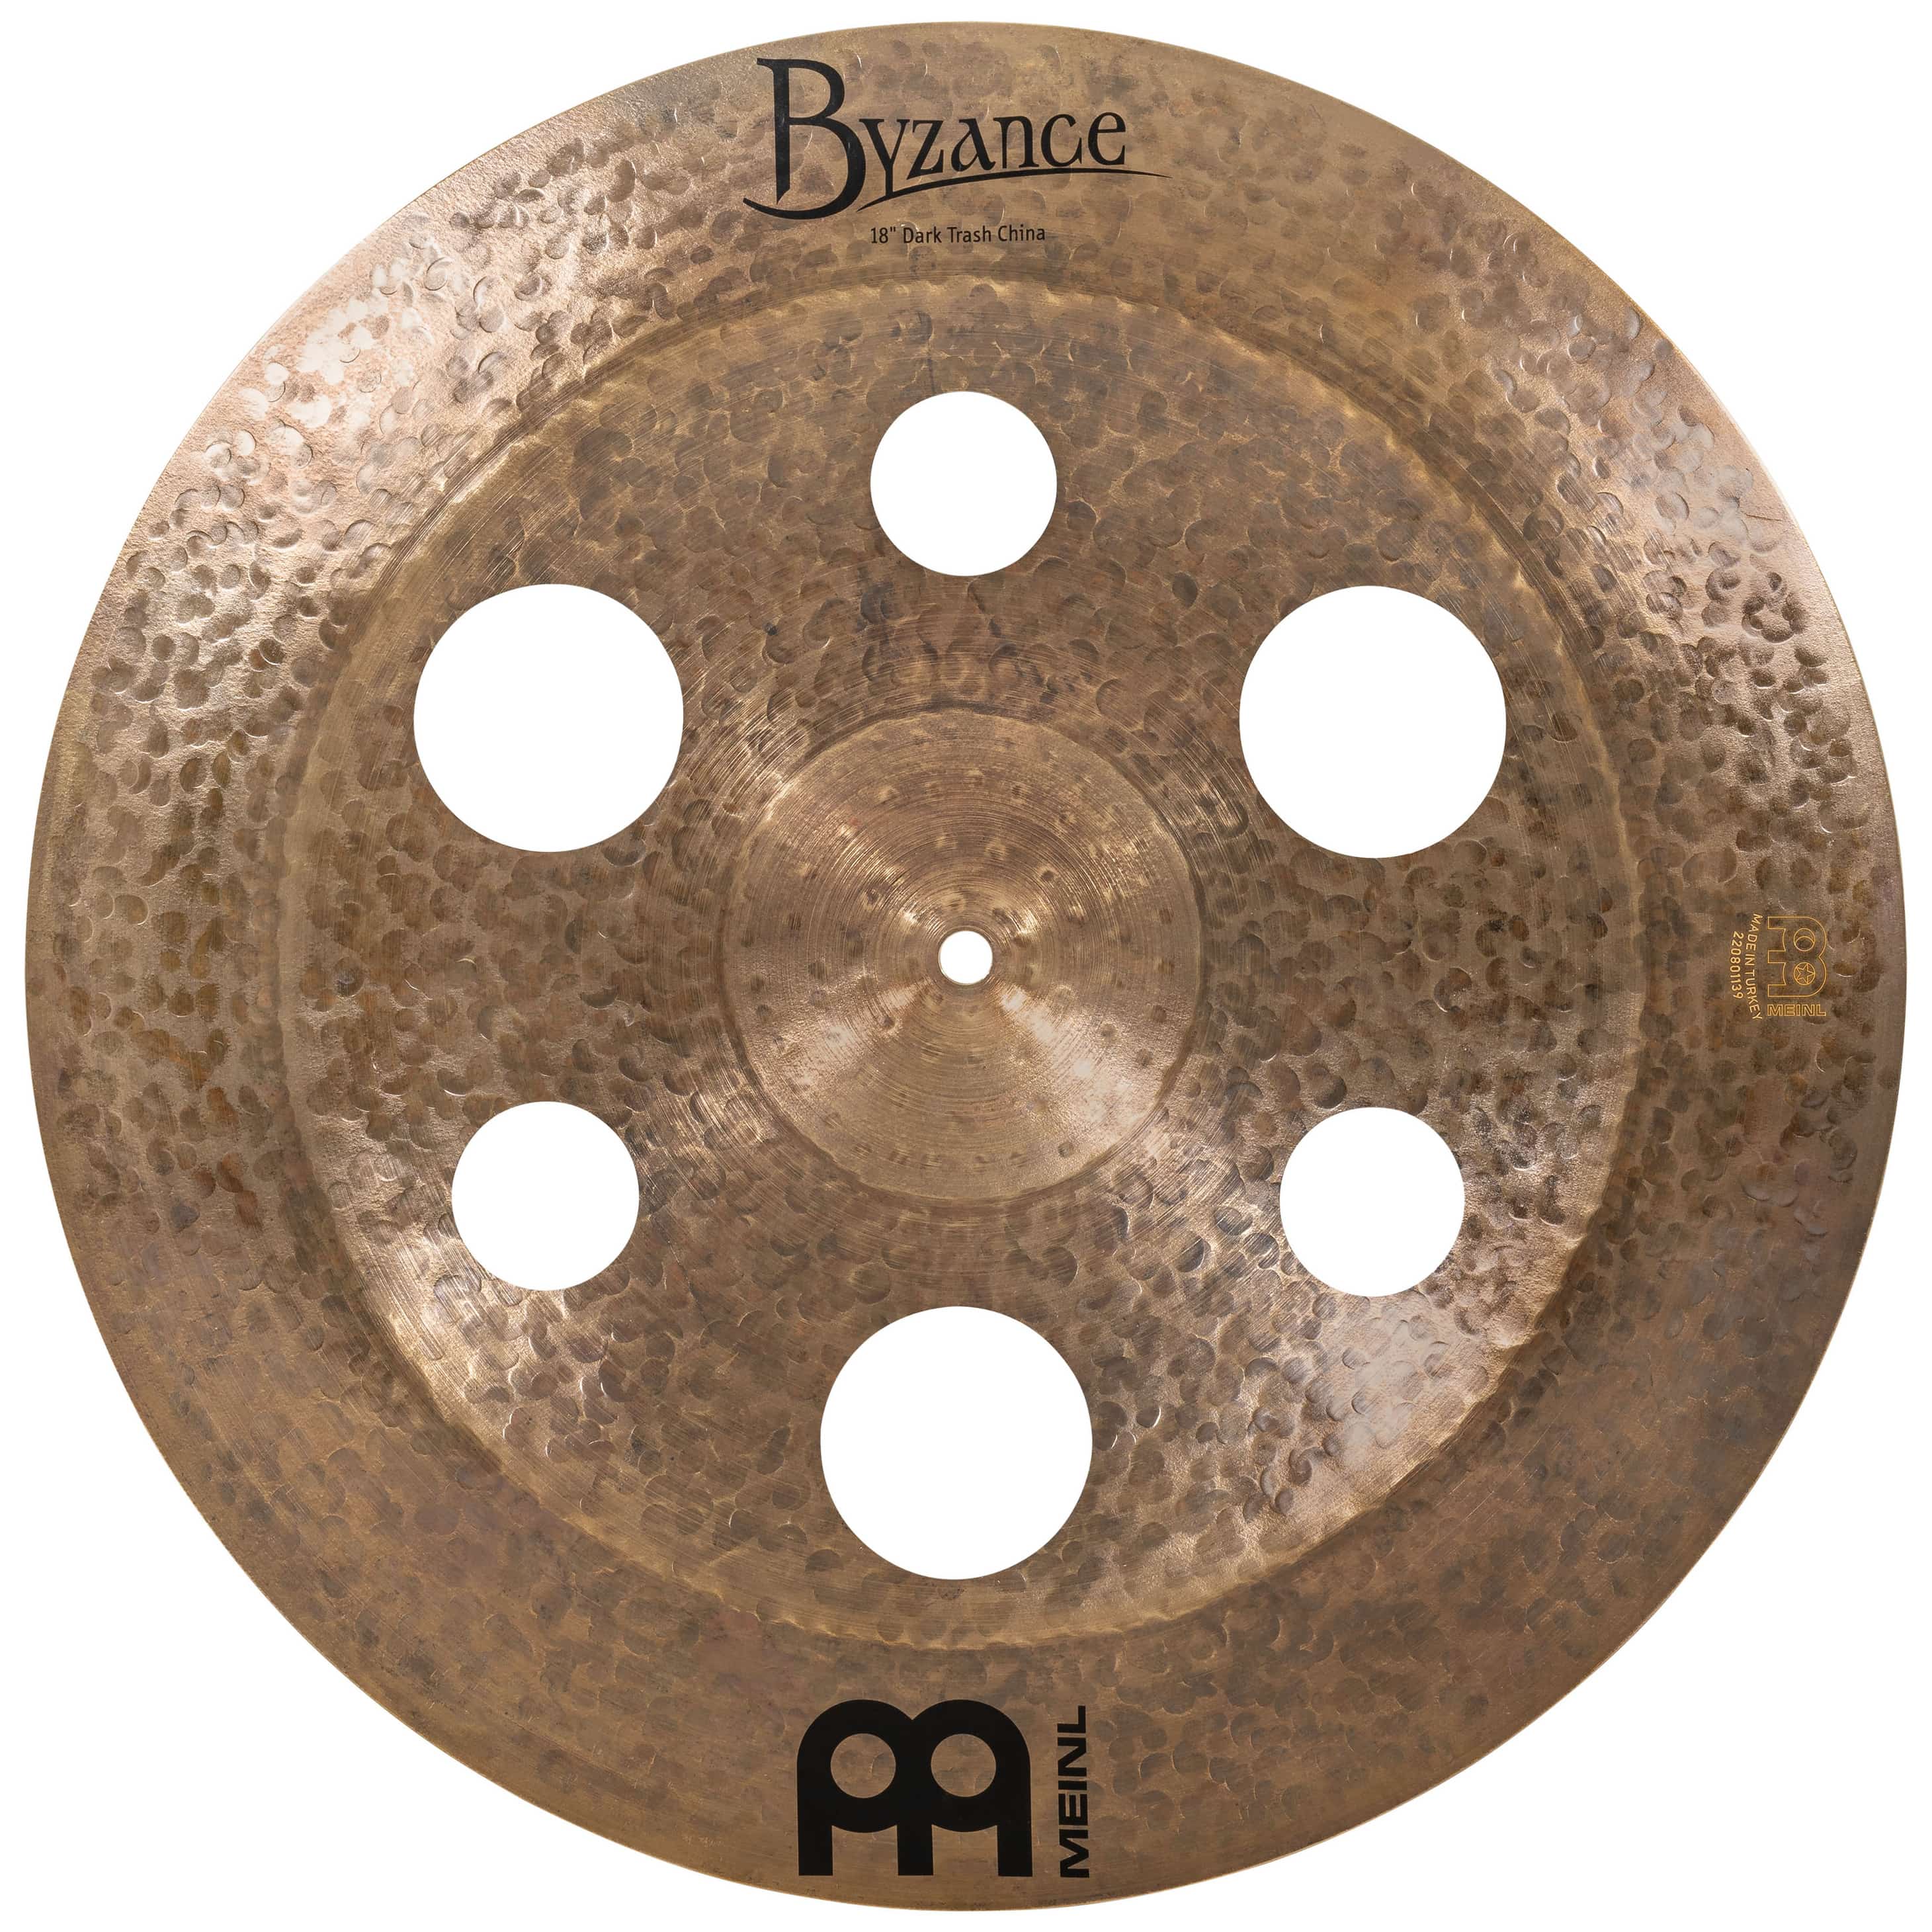 Meinl Cymbals B18DATRCH - 18" Byzance Dark Trash China